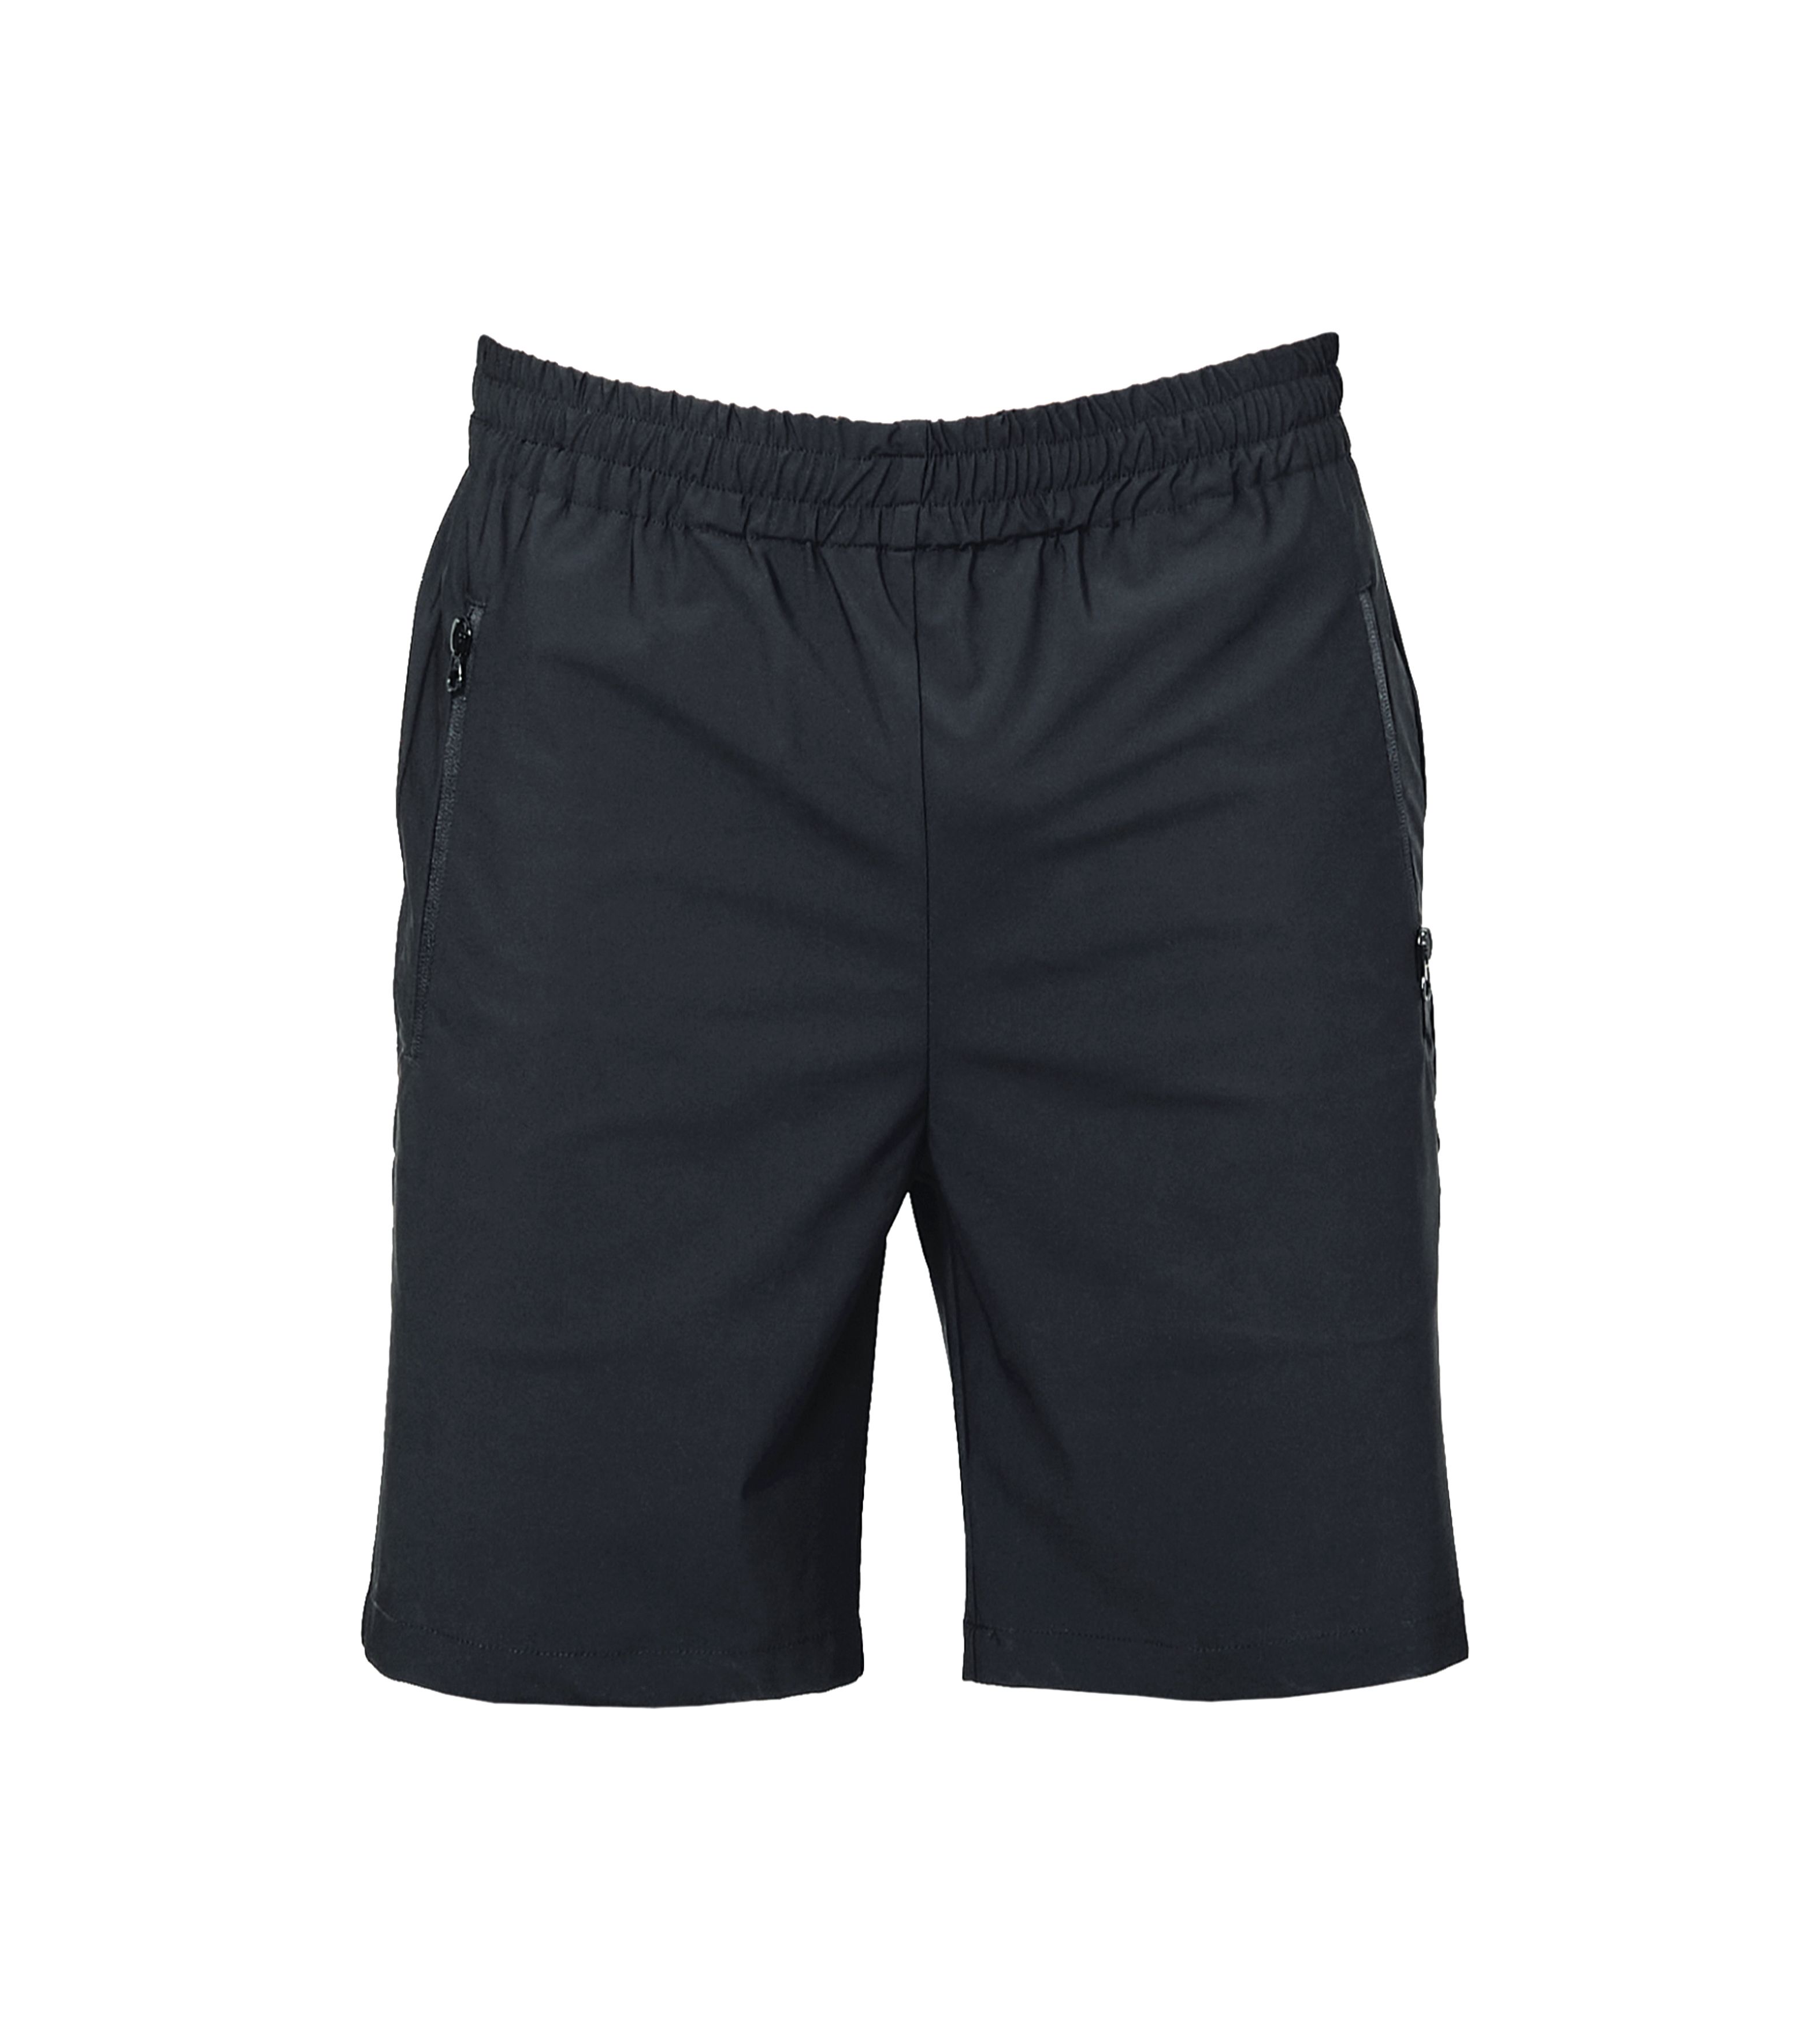 Hose Capri Shorts